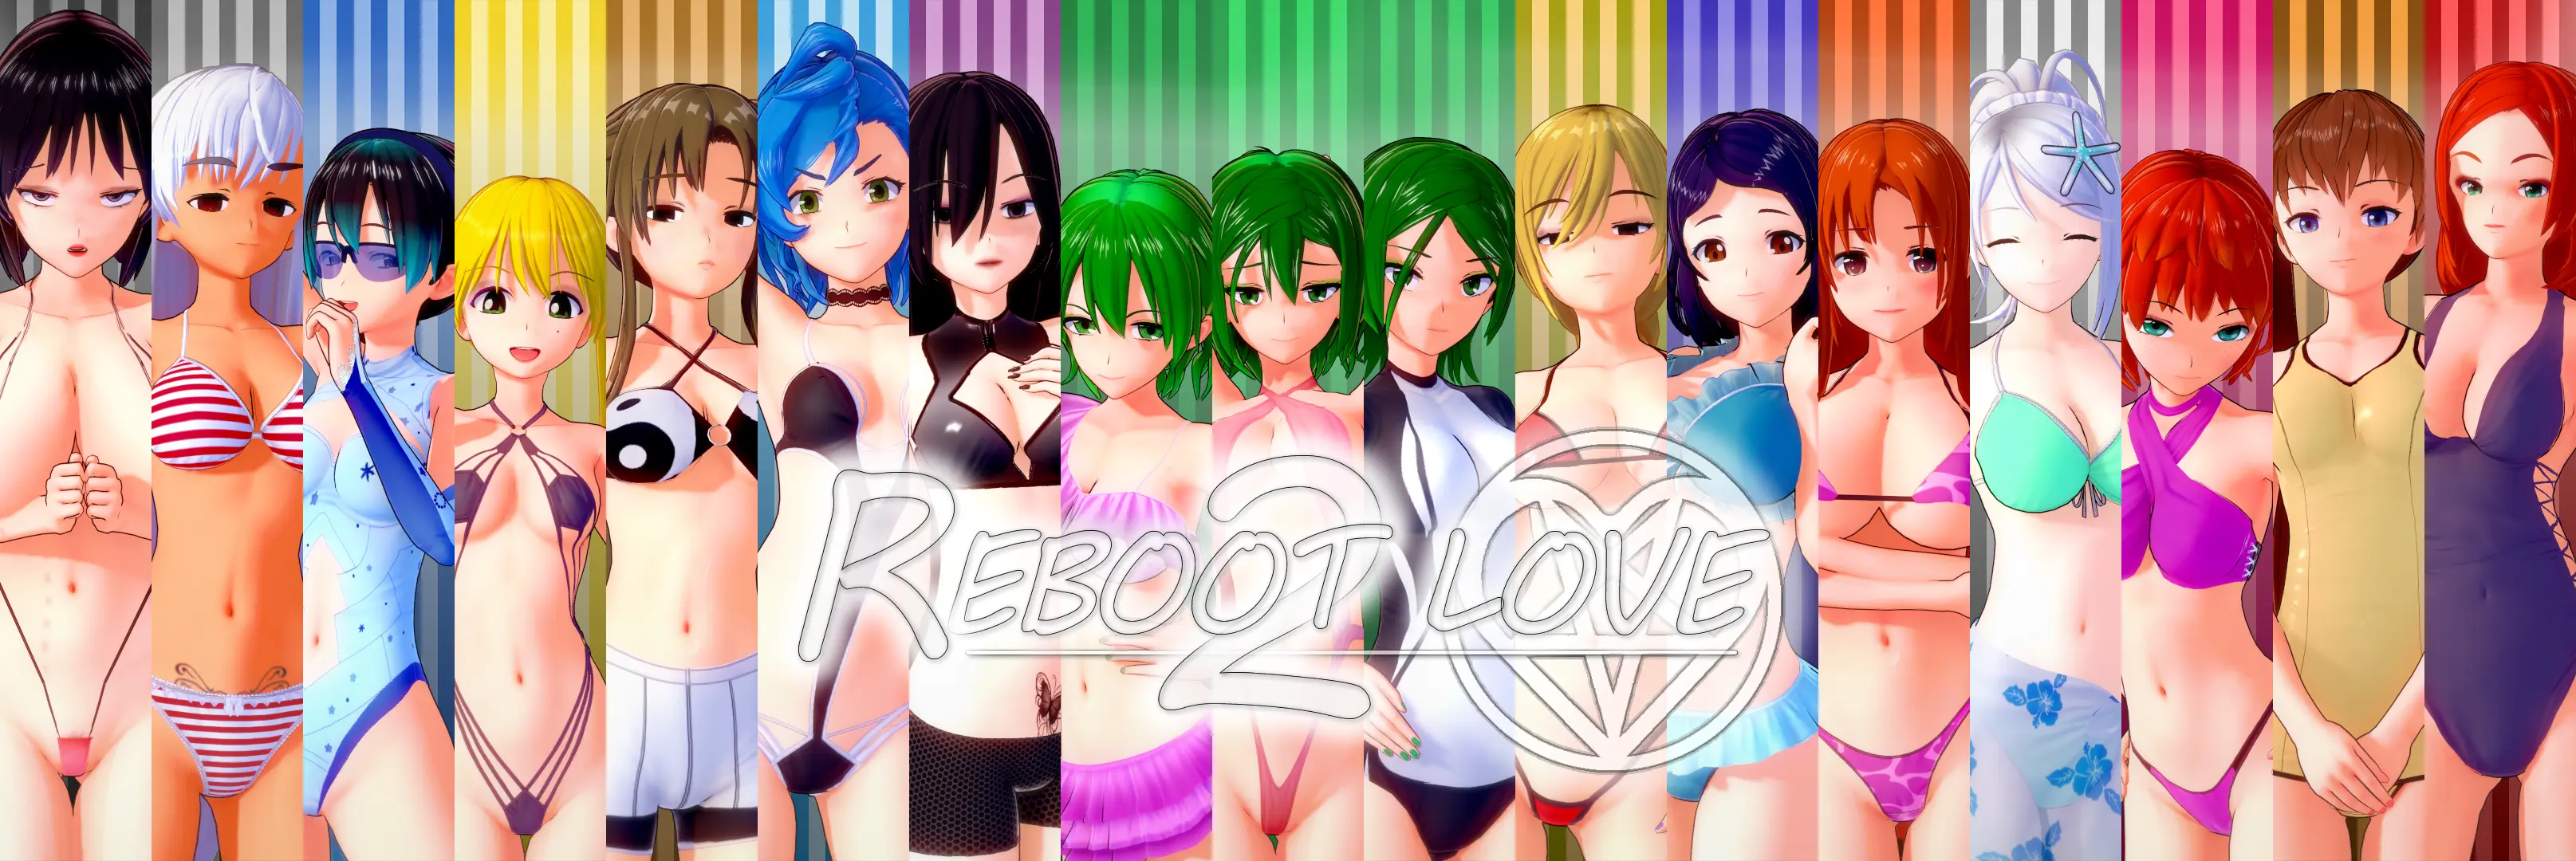 Reboot Love Part 2 [v2.1.0] main image